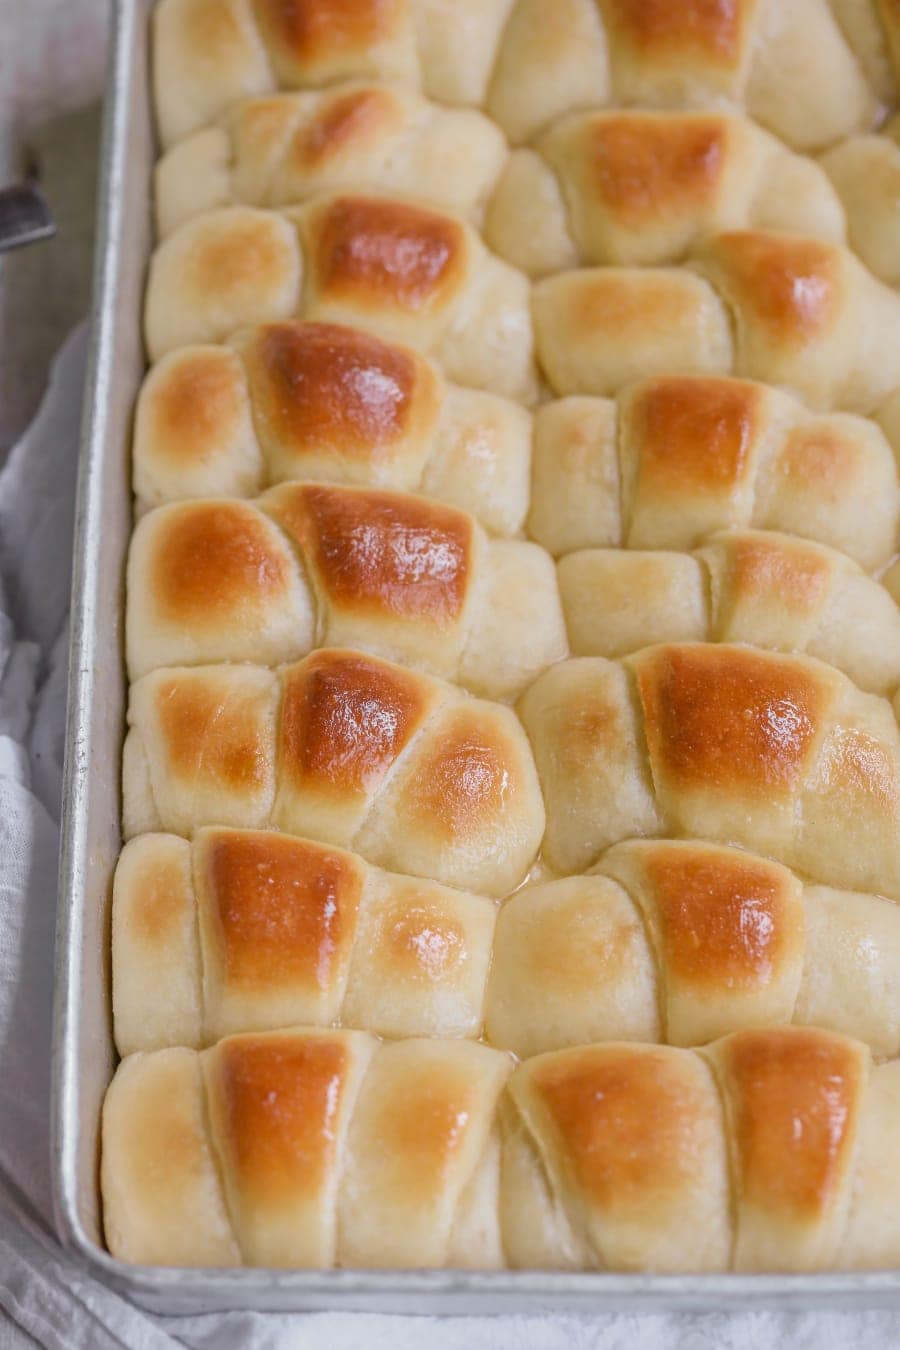 Serve crockpot brown sugar ham with heavenly dinner rolls.